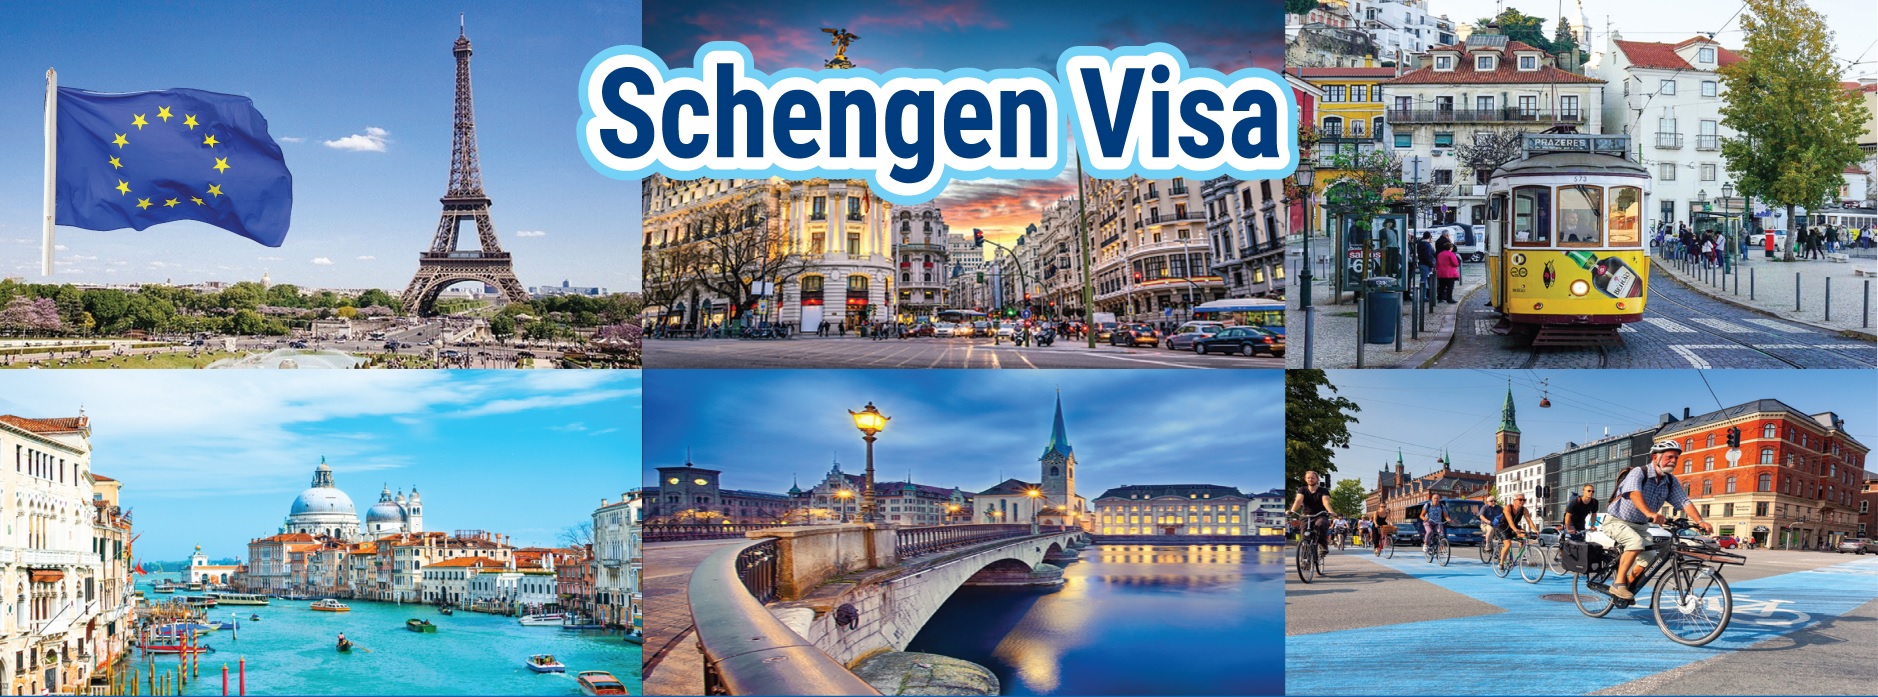 Schengen Visa from Bangladesh